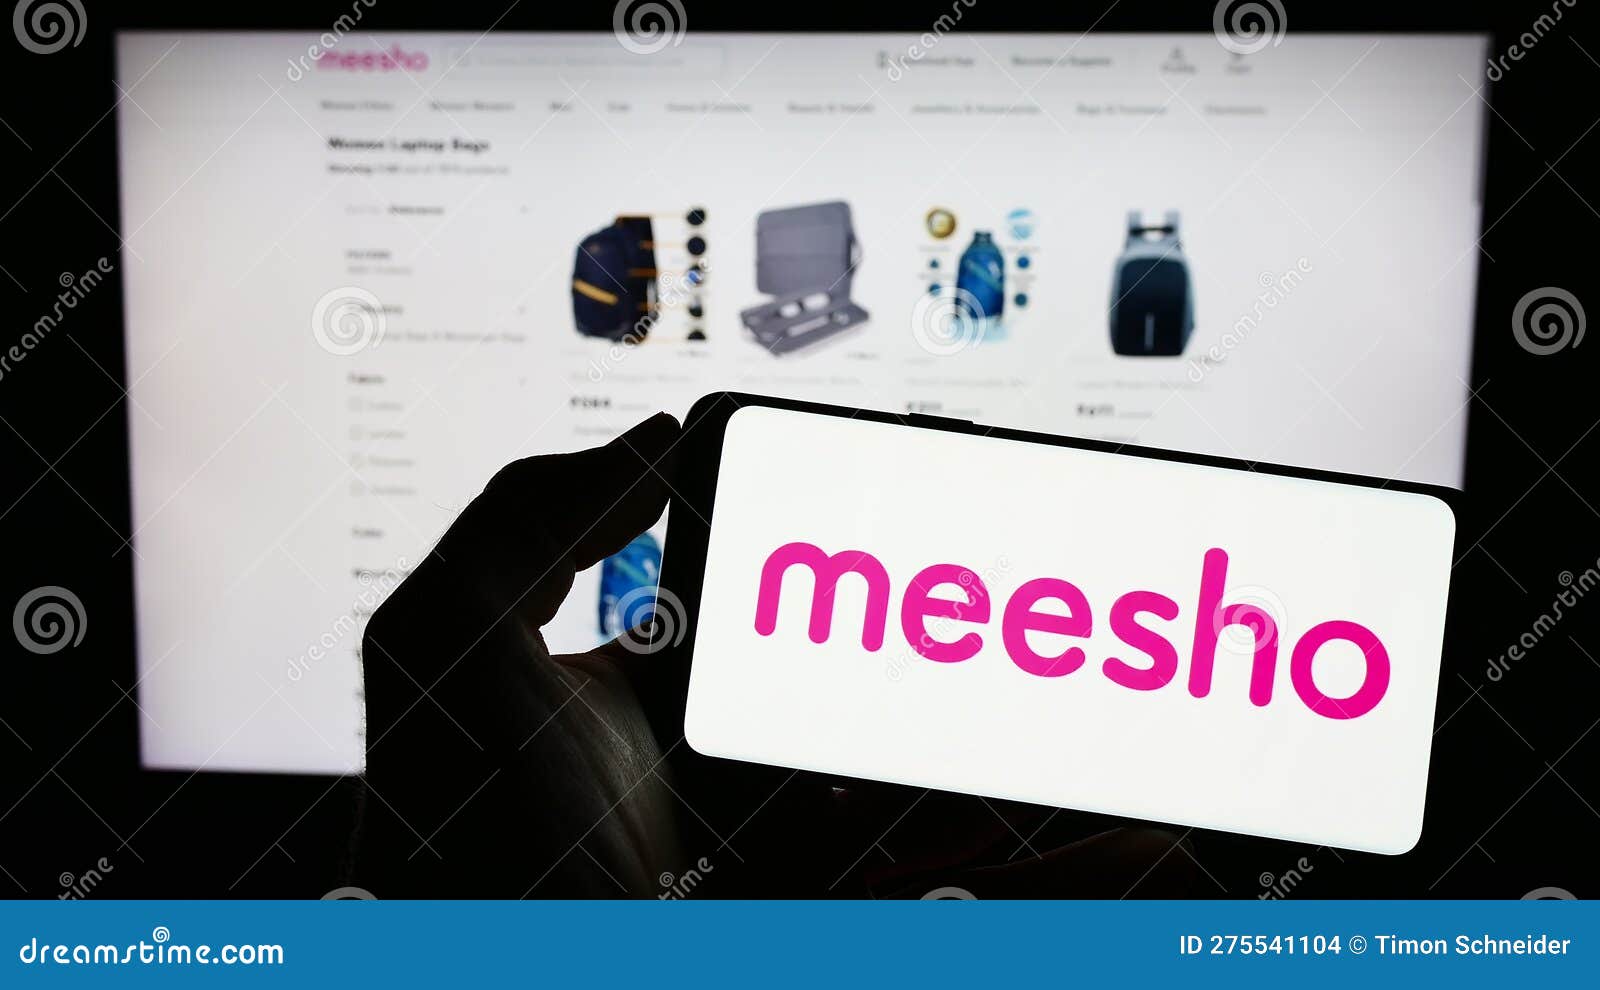 Meeshoo releases Teleport EP on Culprit | Release, House music, Logo design